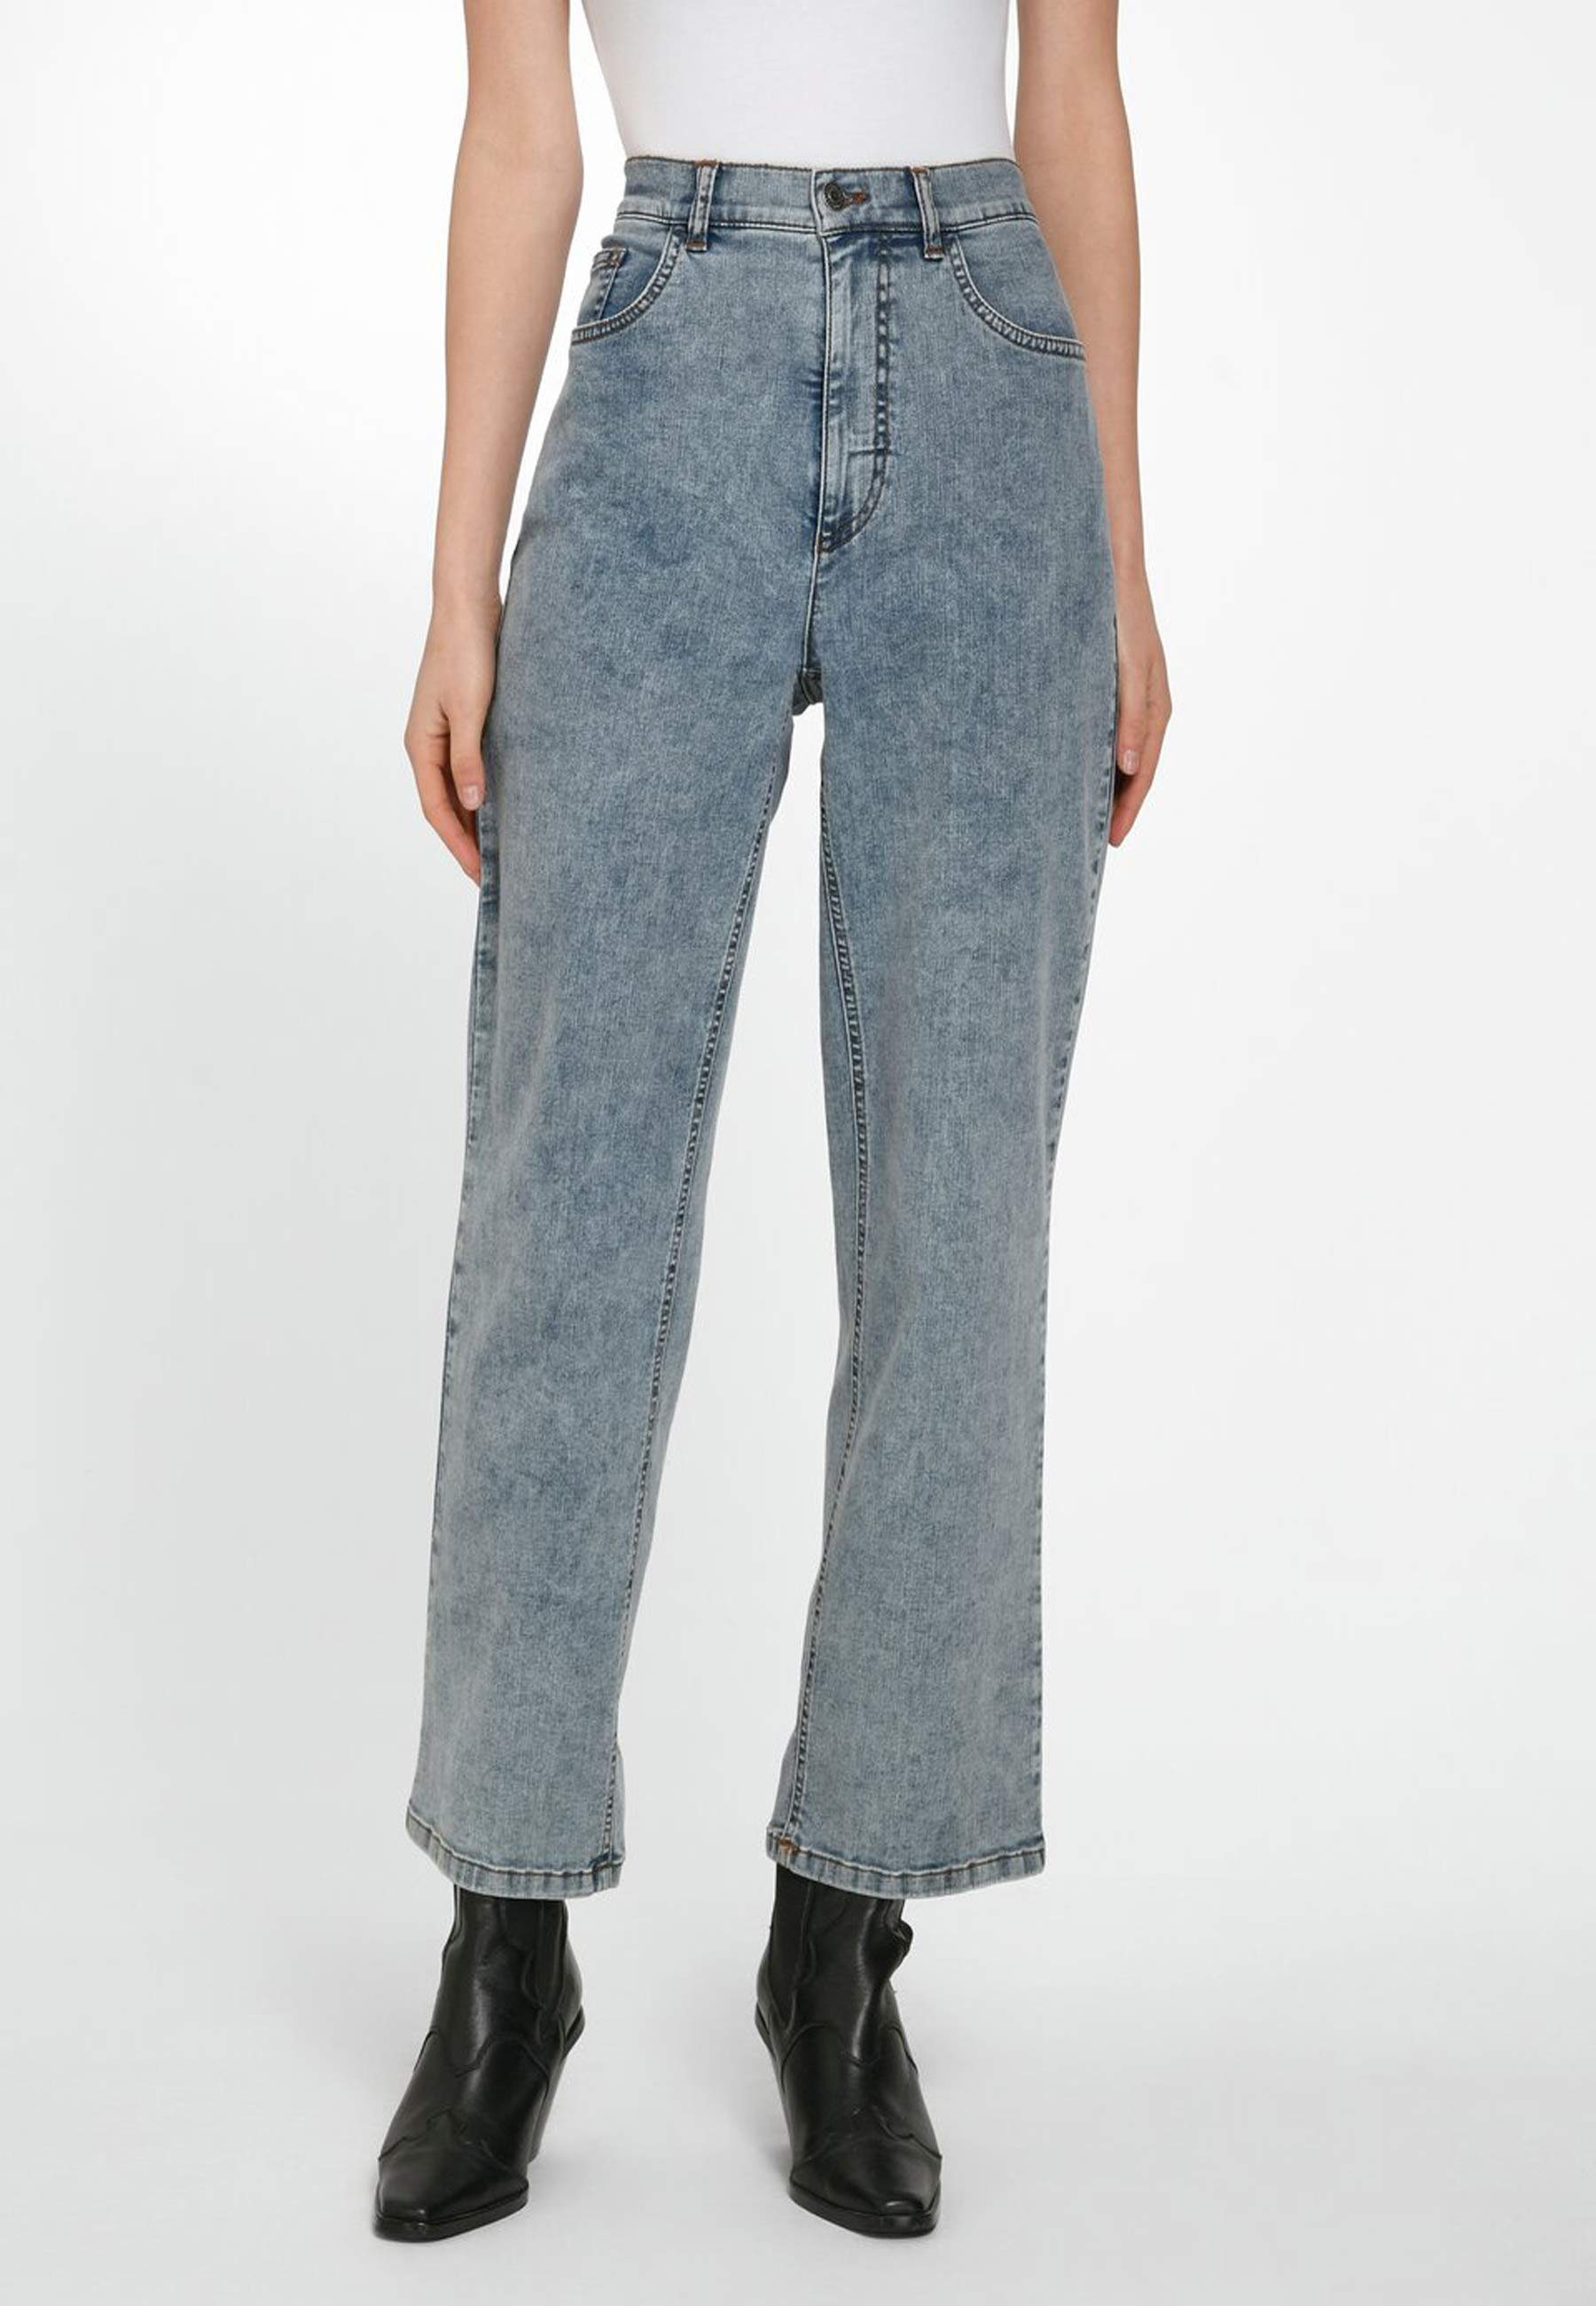 WALL mit hellblau Cotton Design London 5-Pocket-Jeans modernem